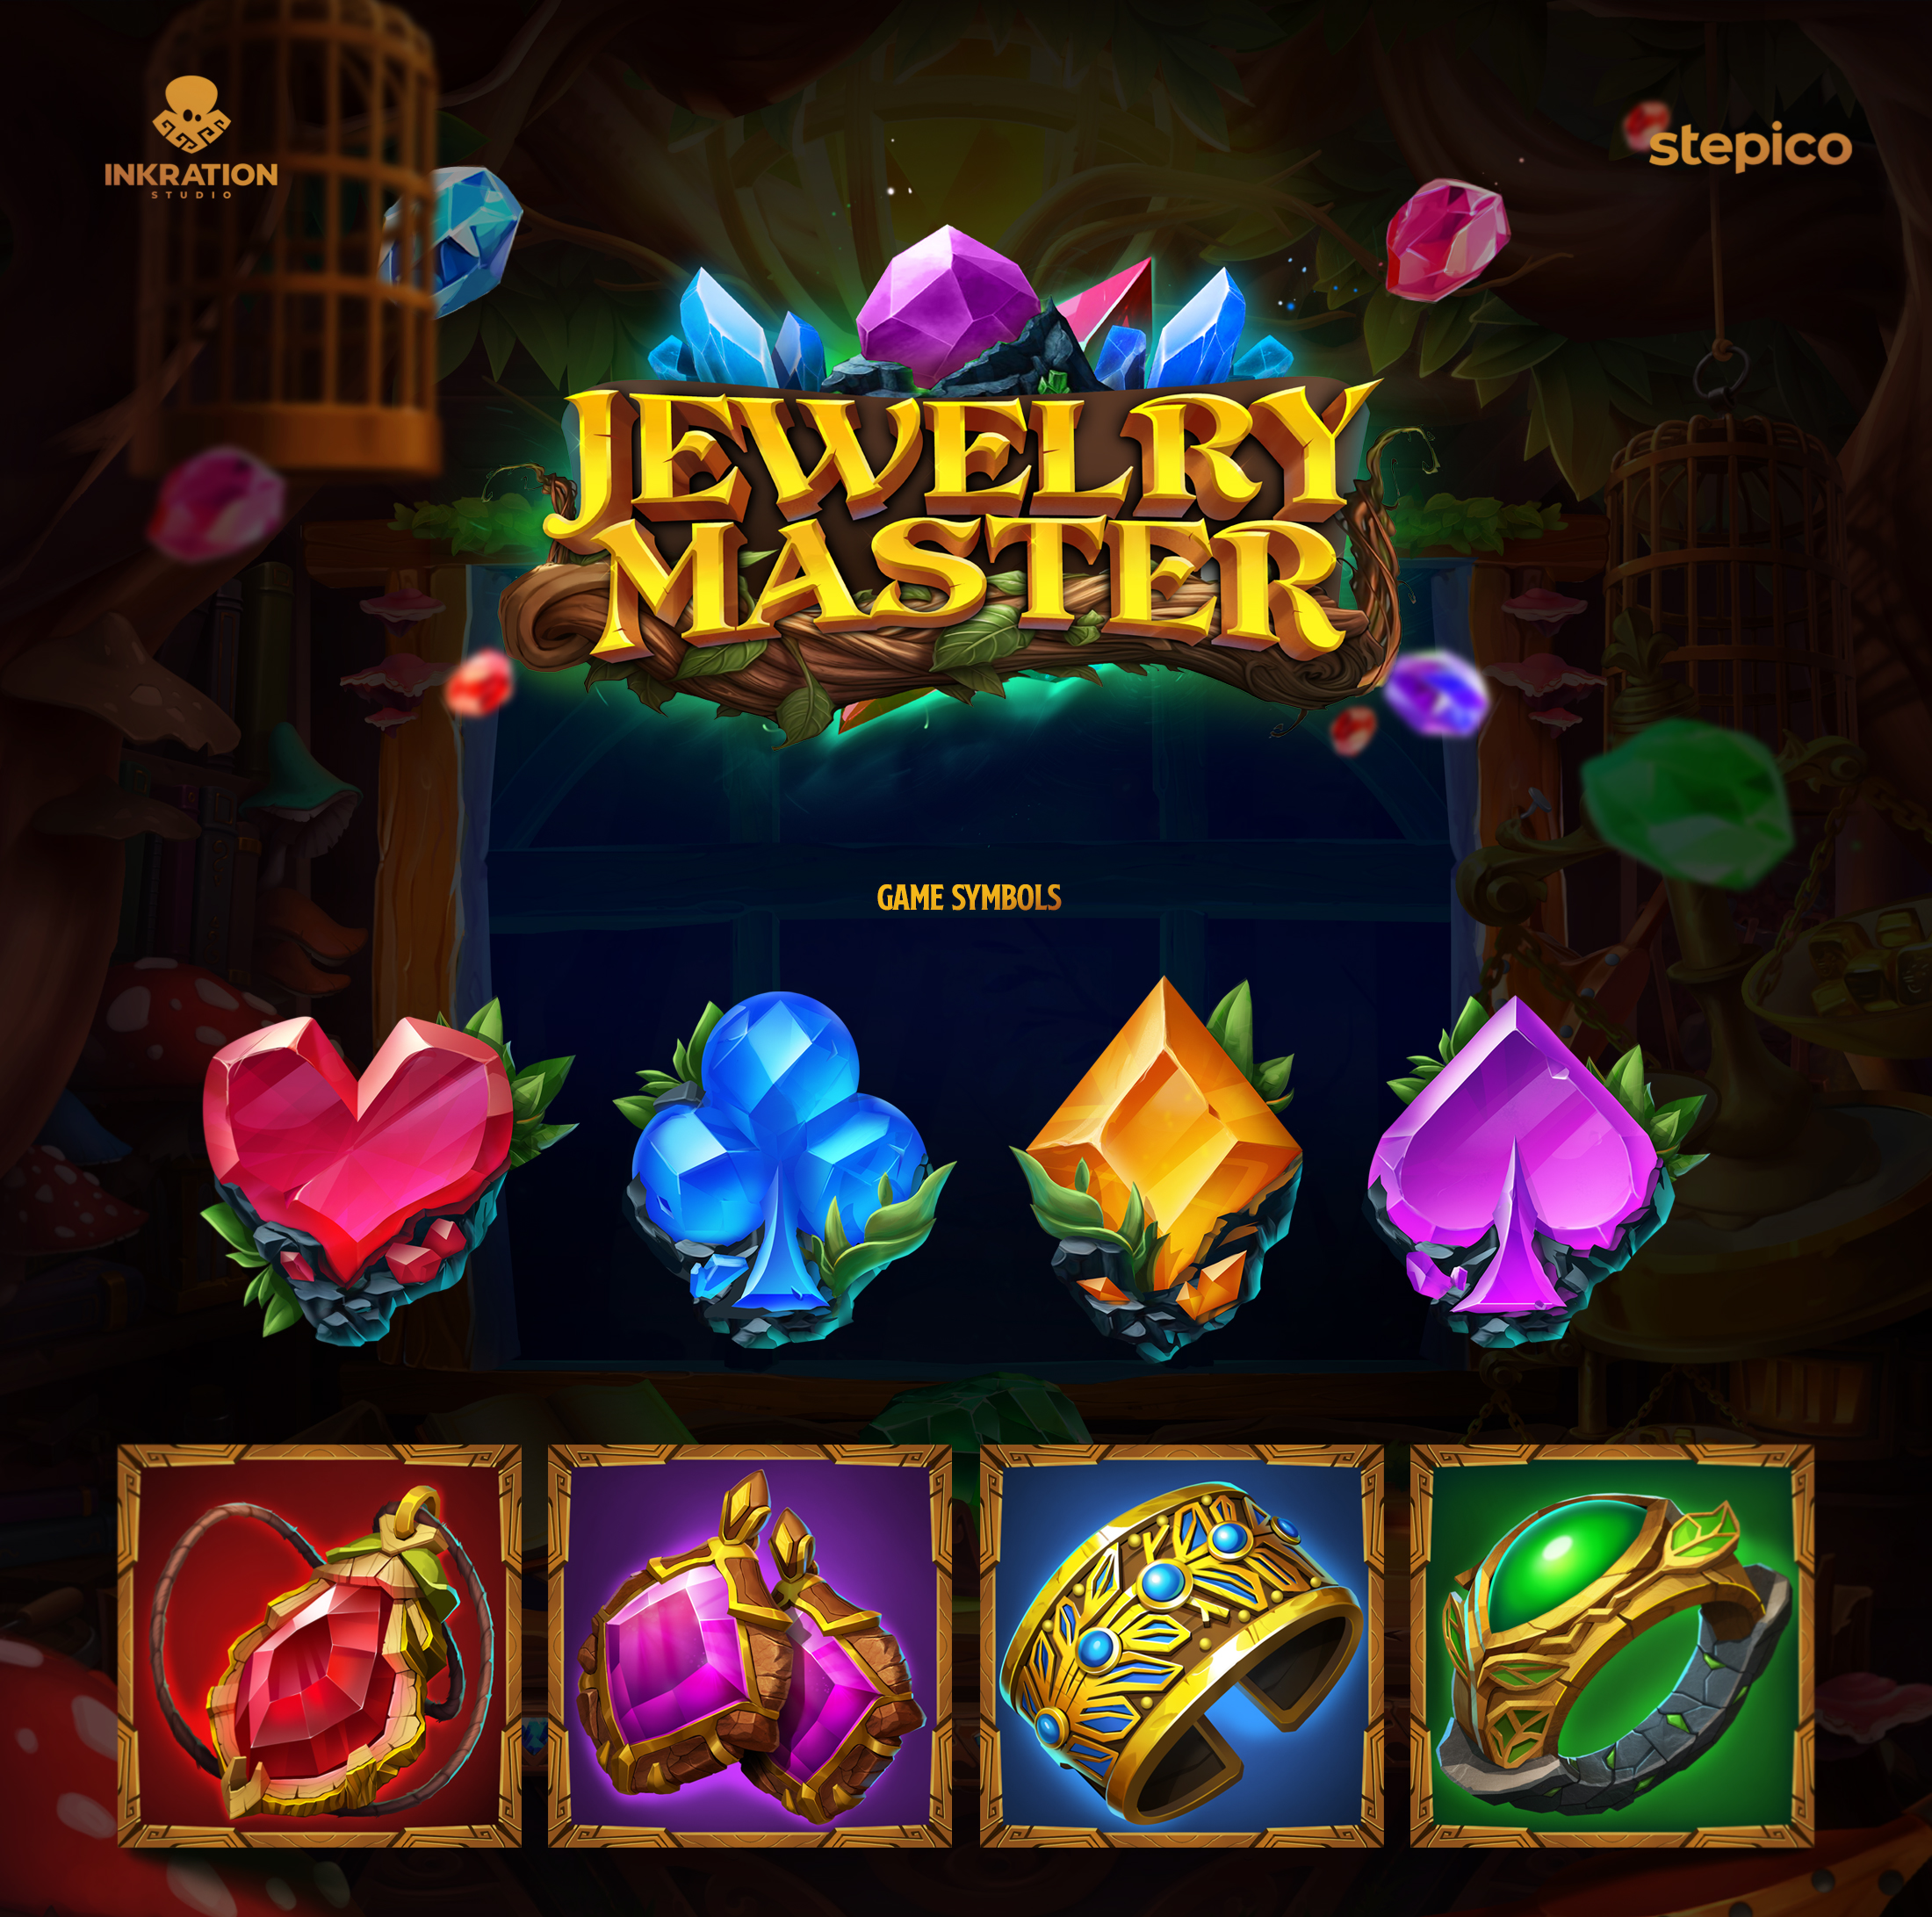 Jewelry Master slot machine symbols